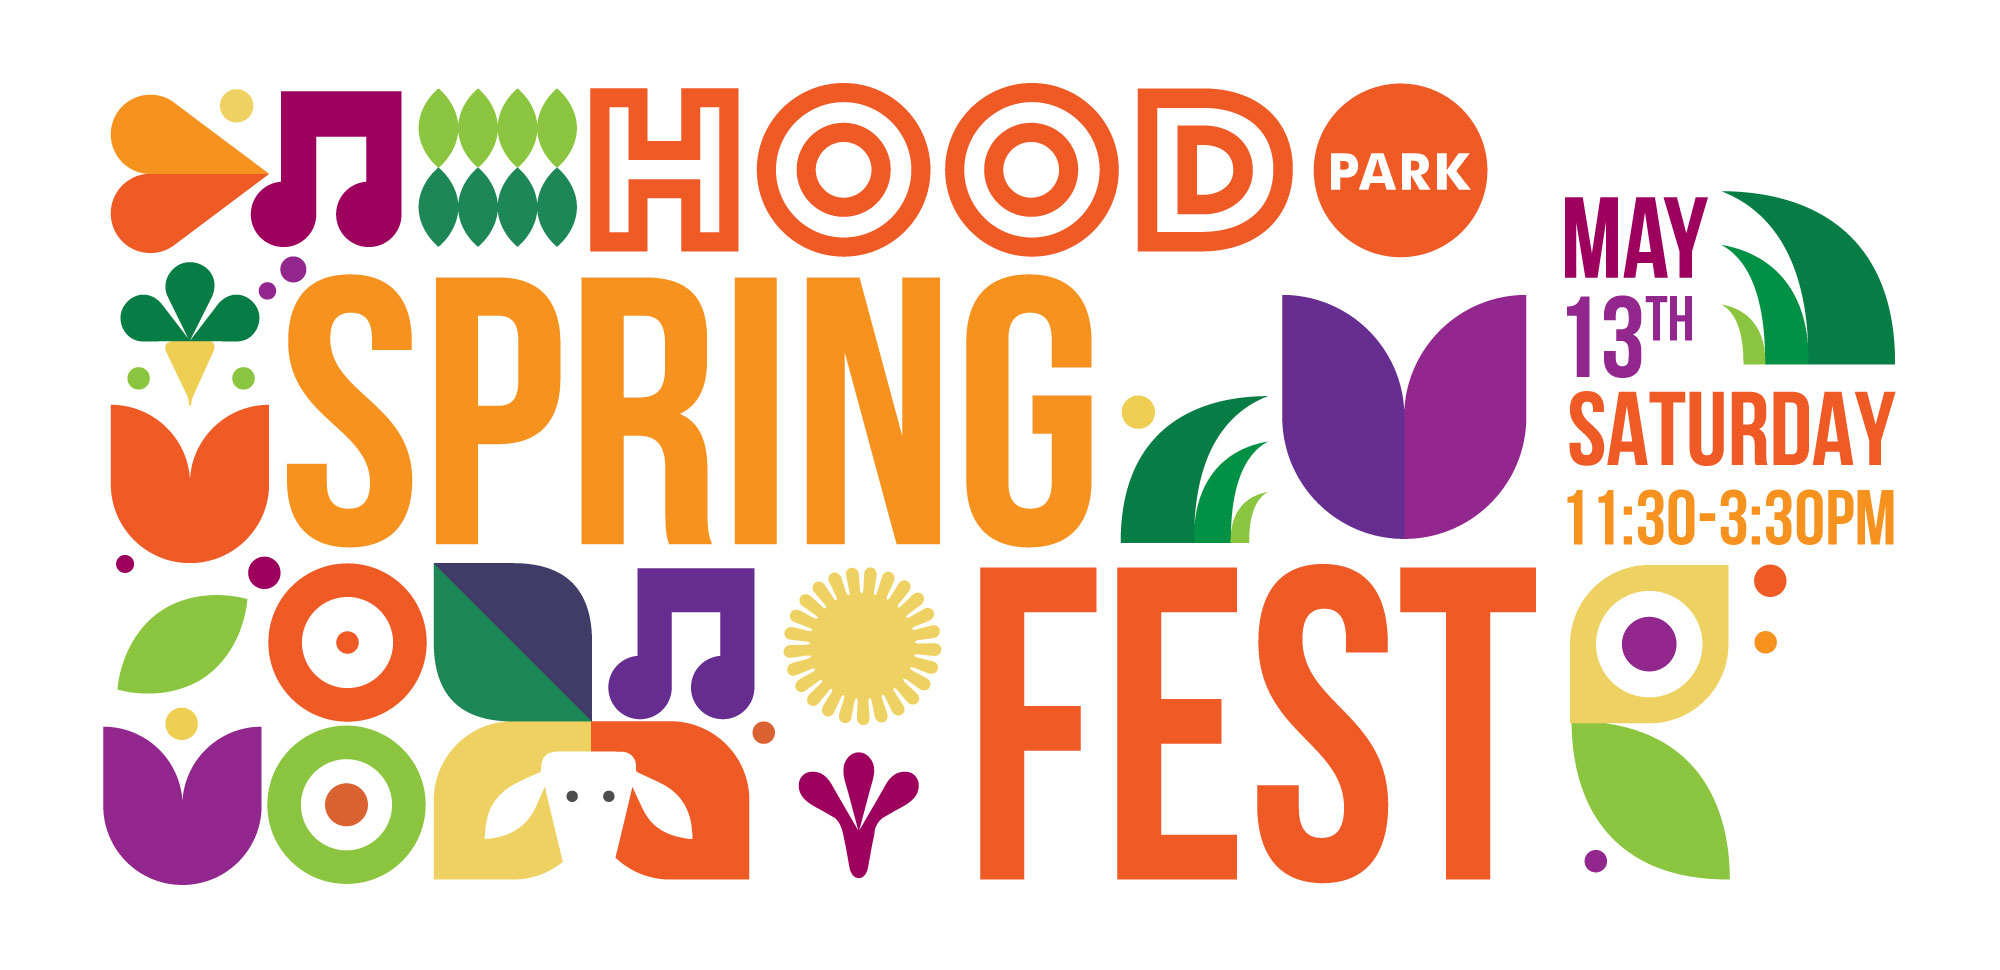 Hood Park Spring Fest! May 13, 2023